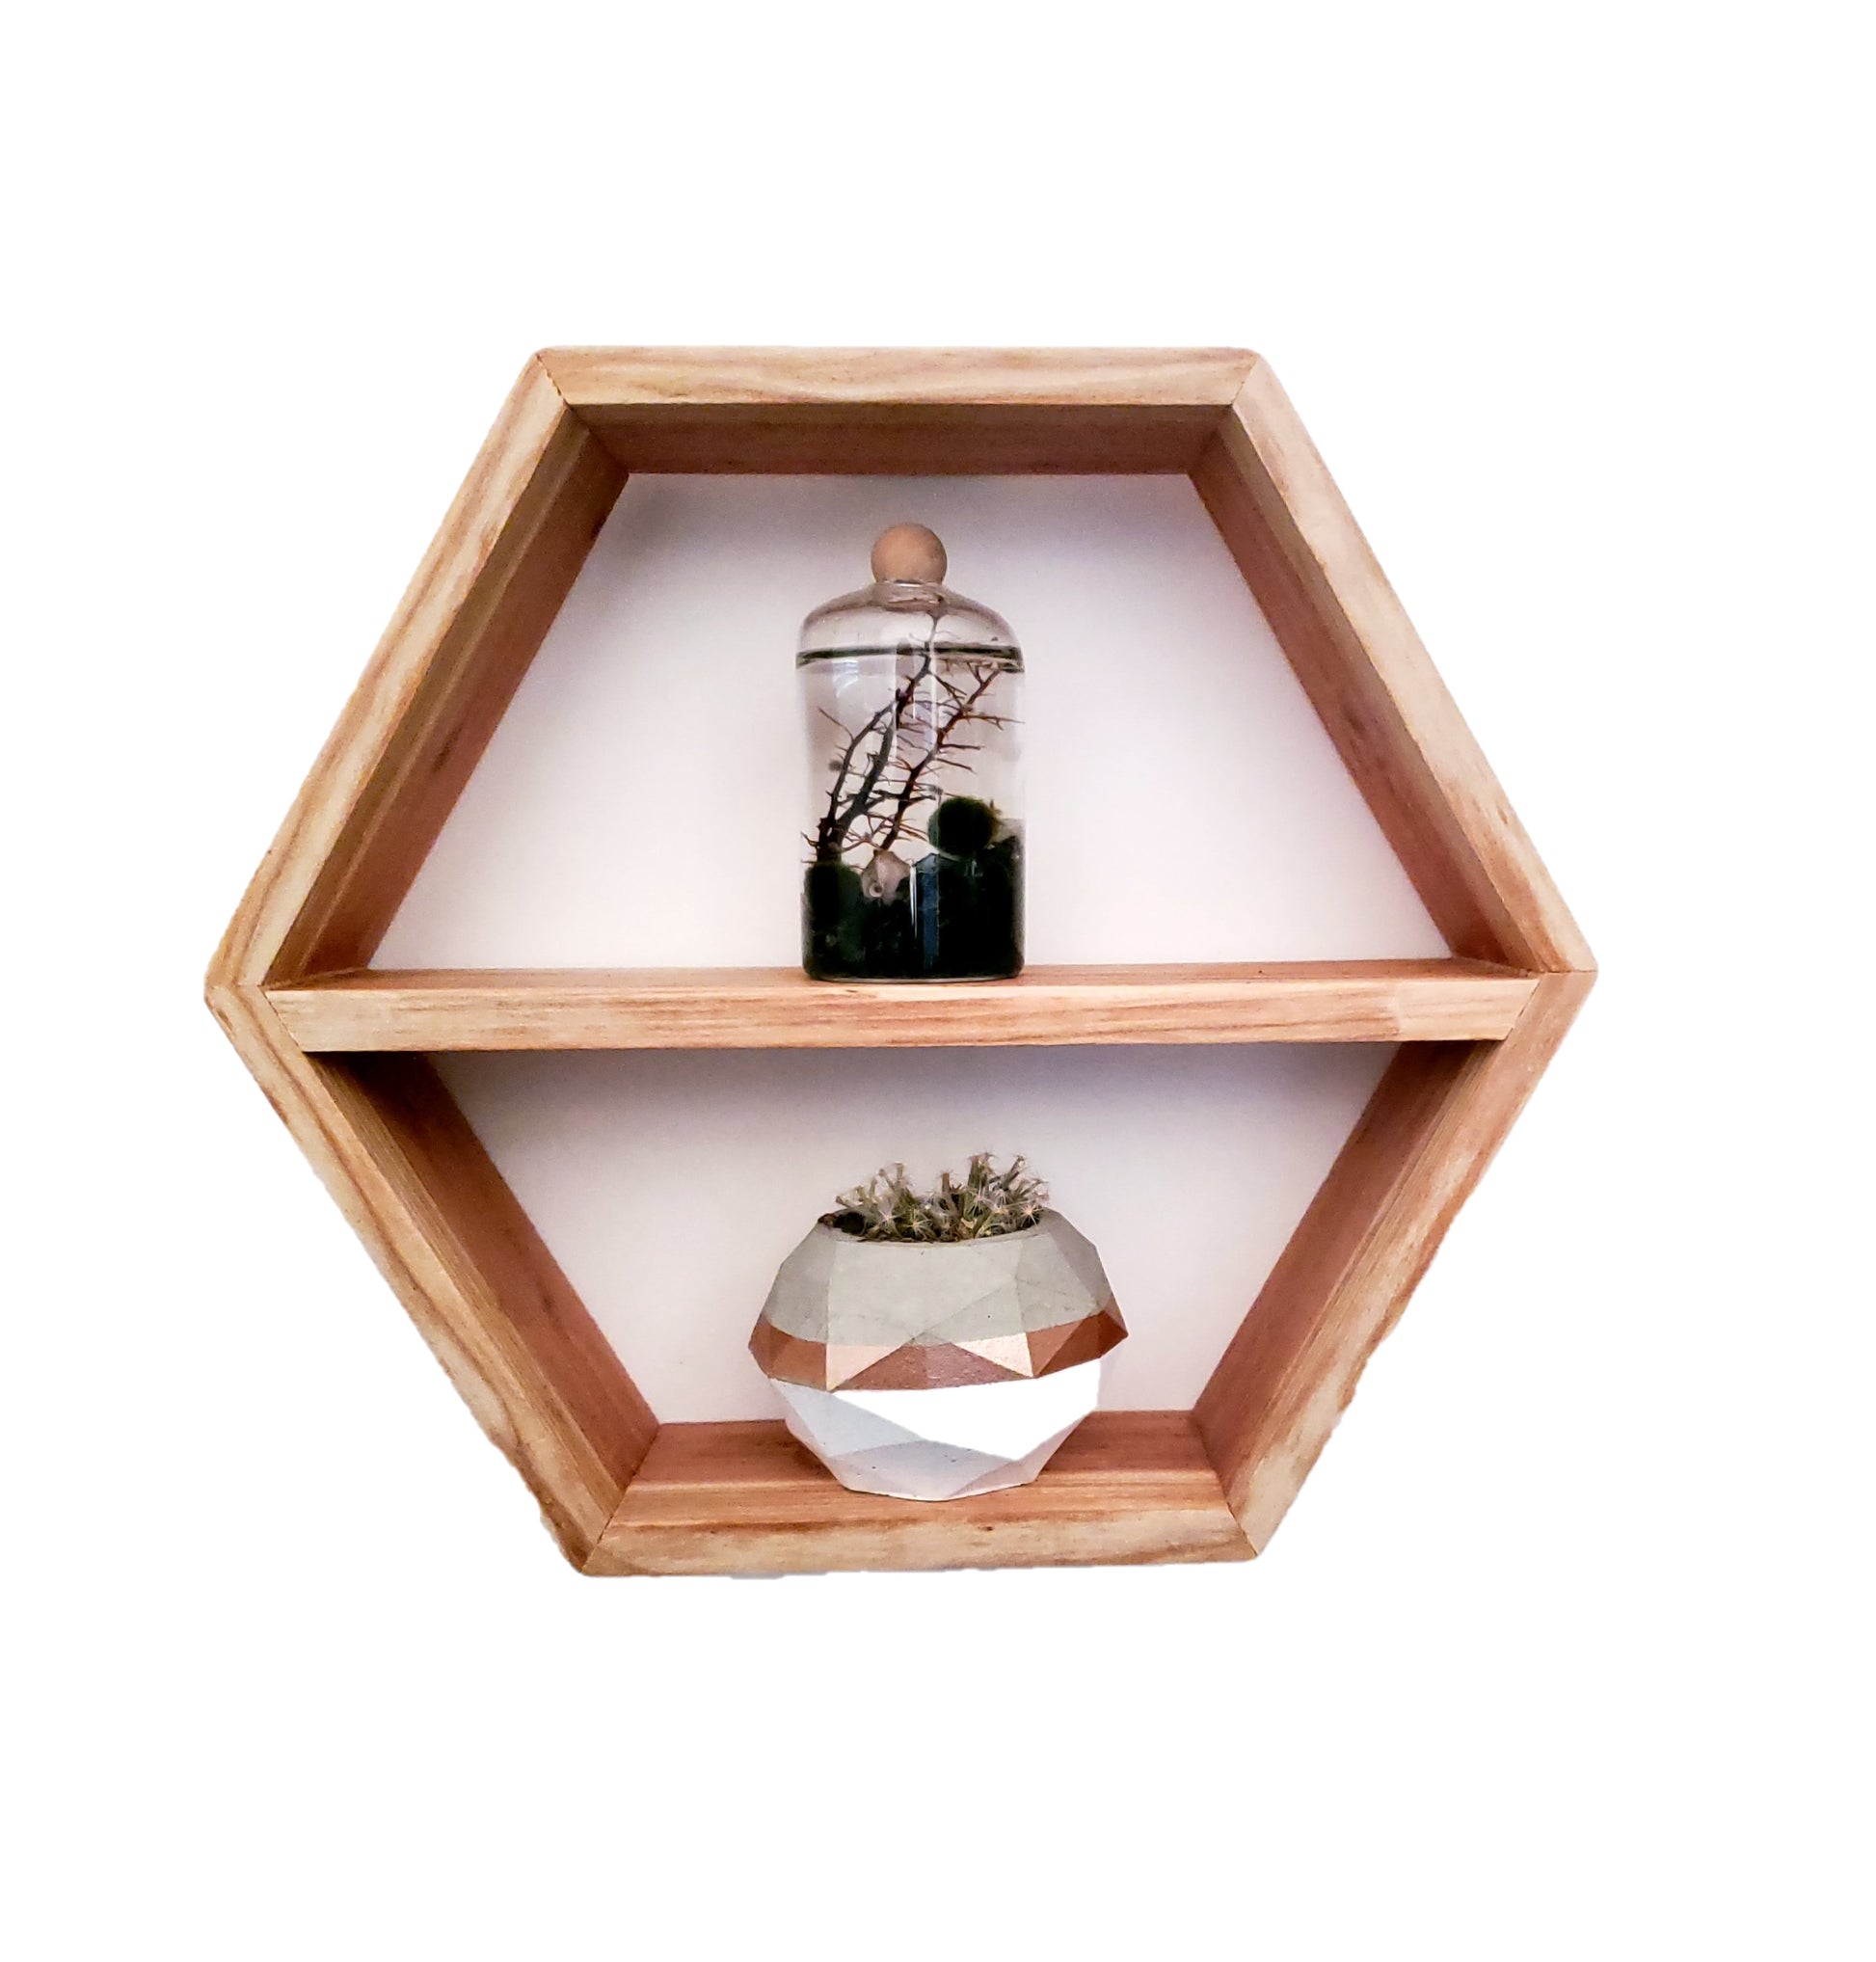 Honeycomb (Hexagon) Shelves, 6 Inches, Handmade from Redwood